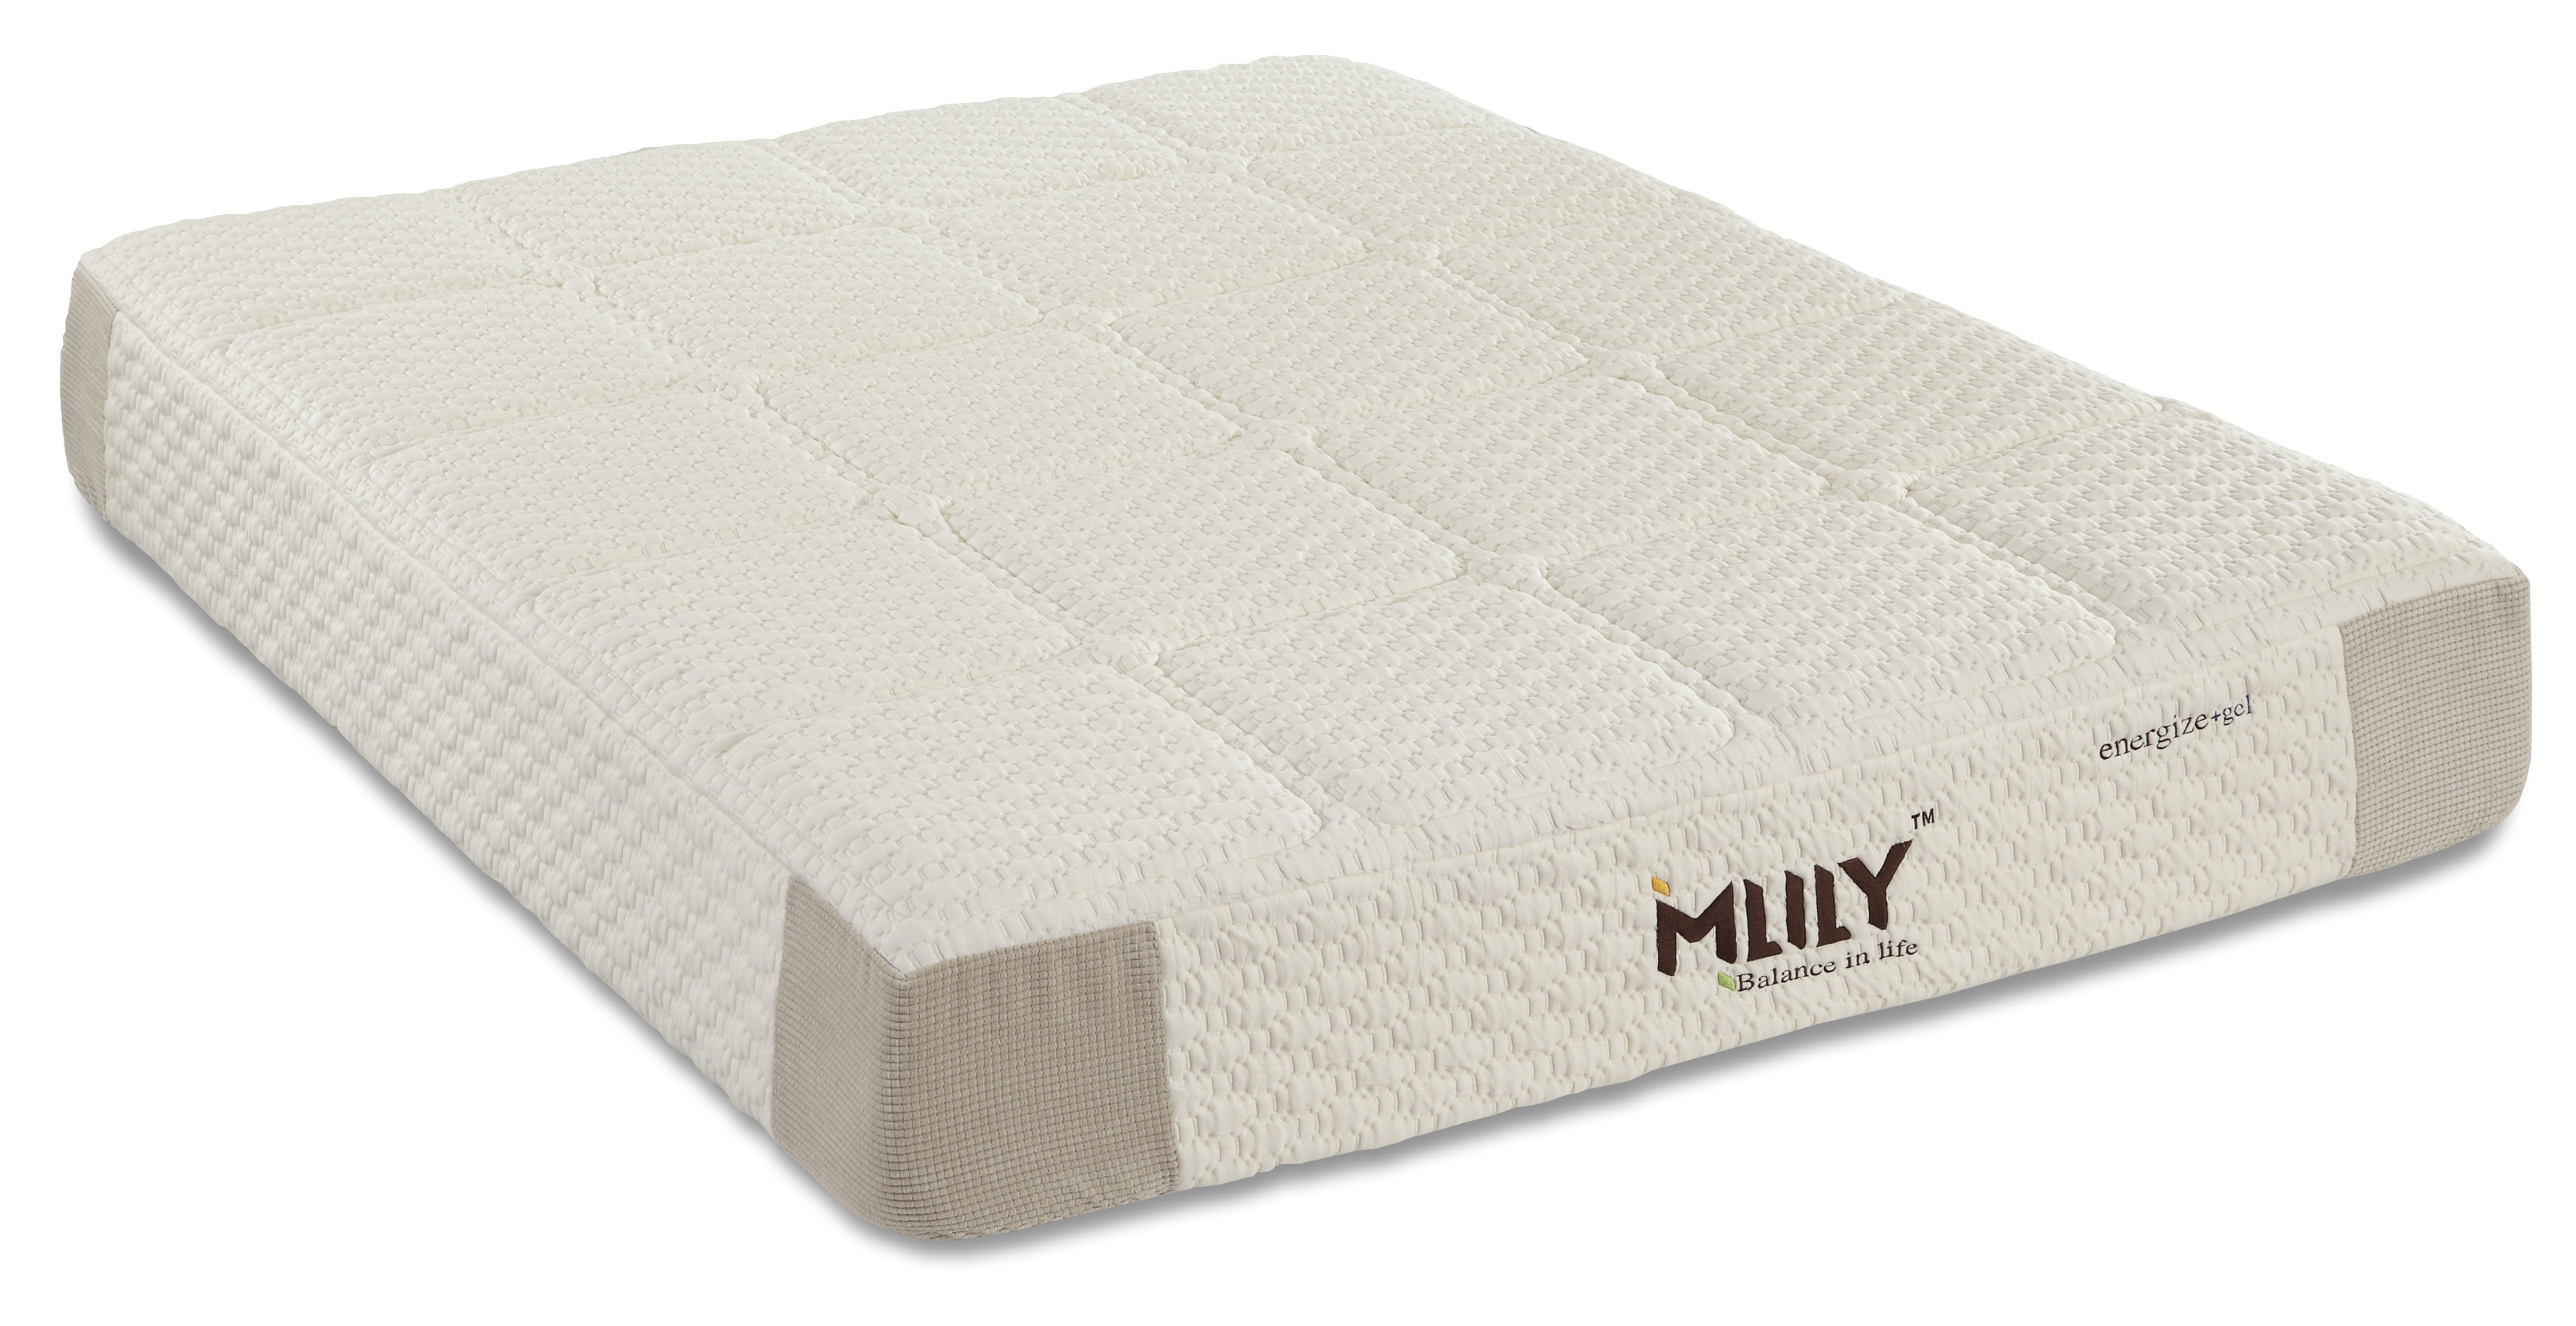 mlily energize gel mattress reviews